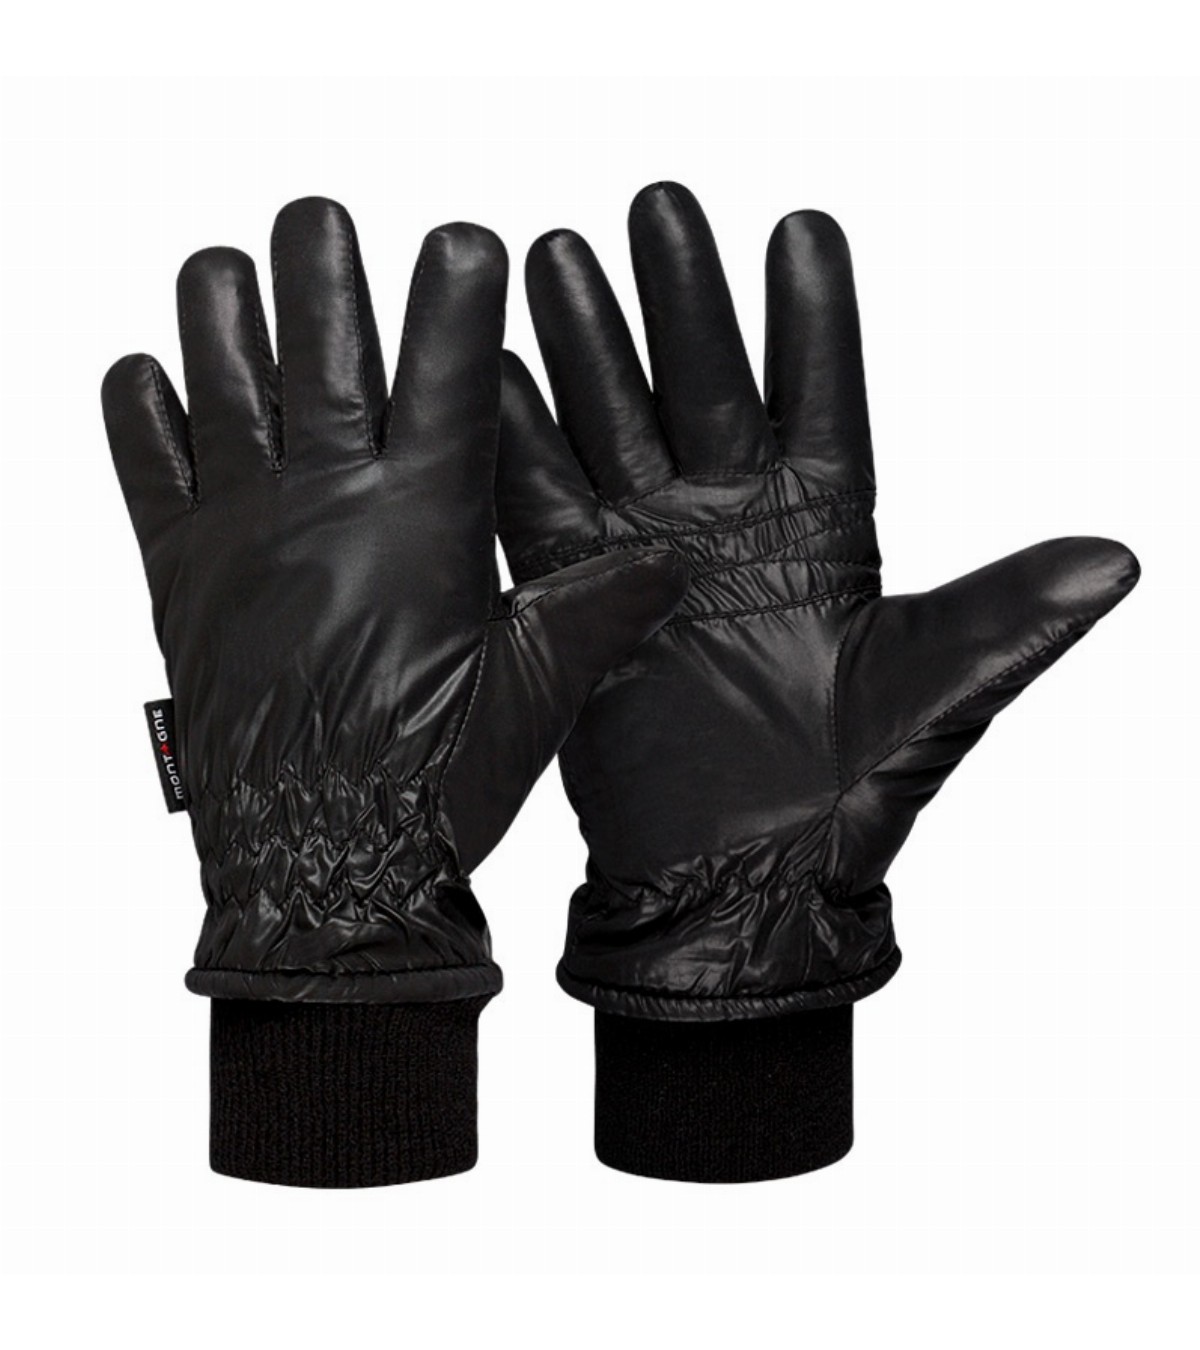 Montagne: guantes, guantes de, guantes para, de hombre, guantes urbanos, guantes para moto, guantes térmicos, guantes interior de polar, guantes para hombre, guantes técnicos, guantes para el frío, accesorios de